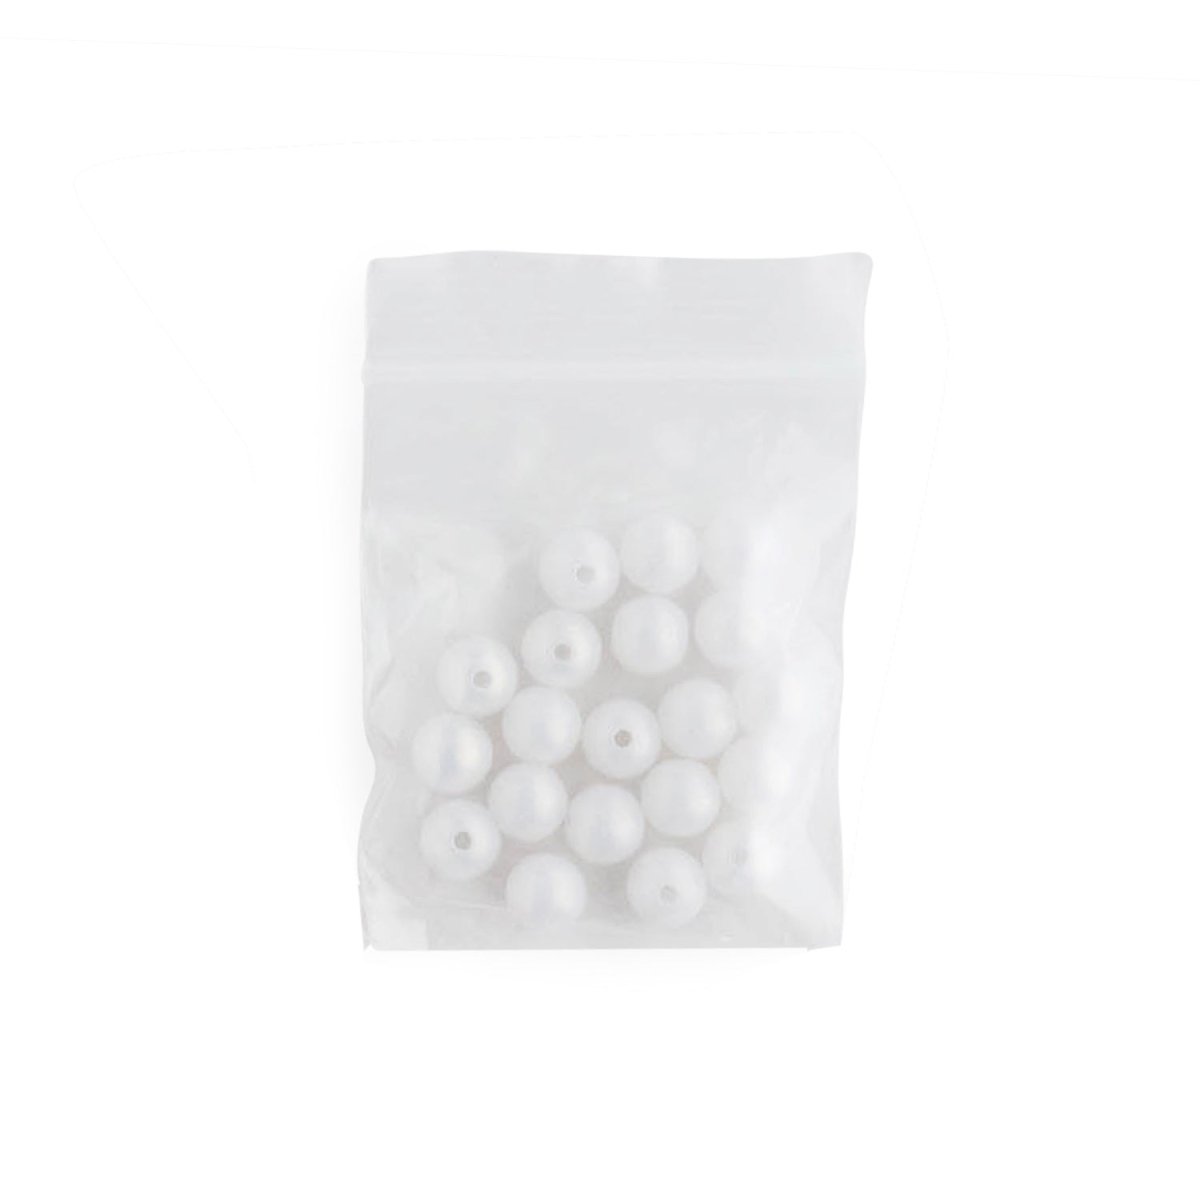 Acrylic Round Beads Matte Metallic 8mm Creamy White from Cara & Co Craft Supply